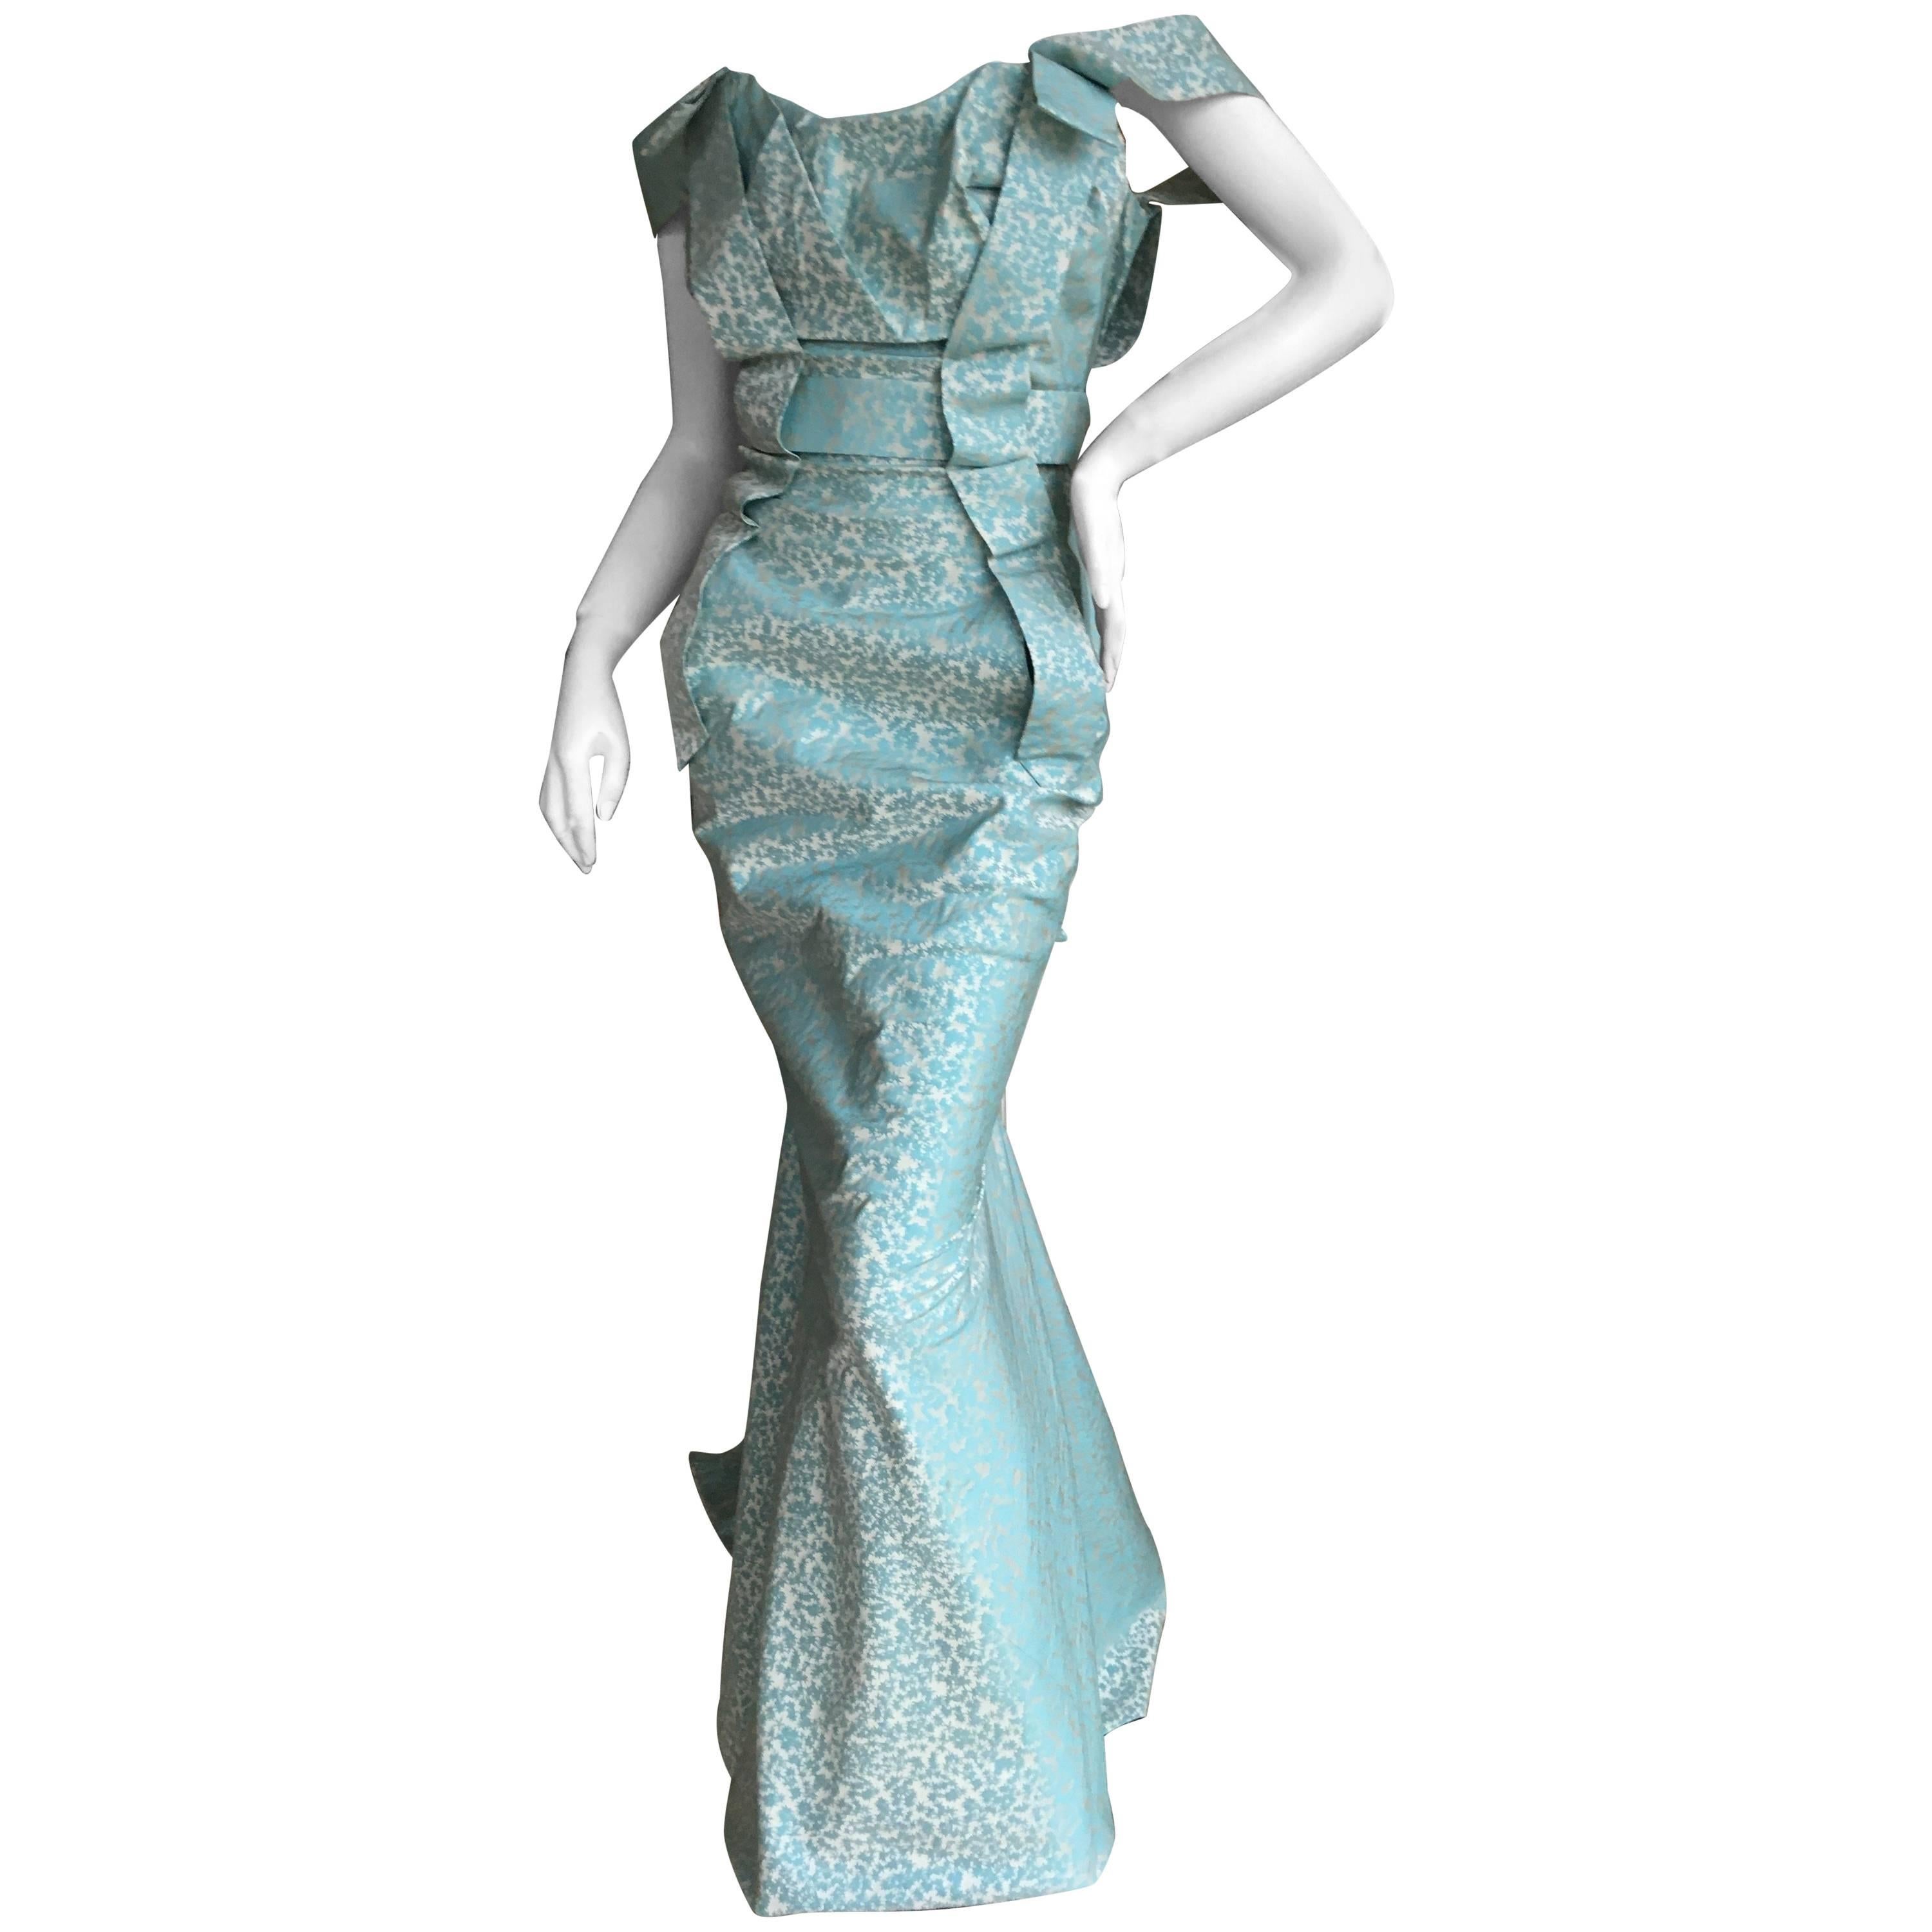 Rita Ora's Vivienne Westwood Gold Label Fishtail Mermaid Gown For Sale